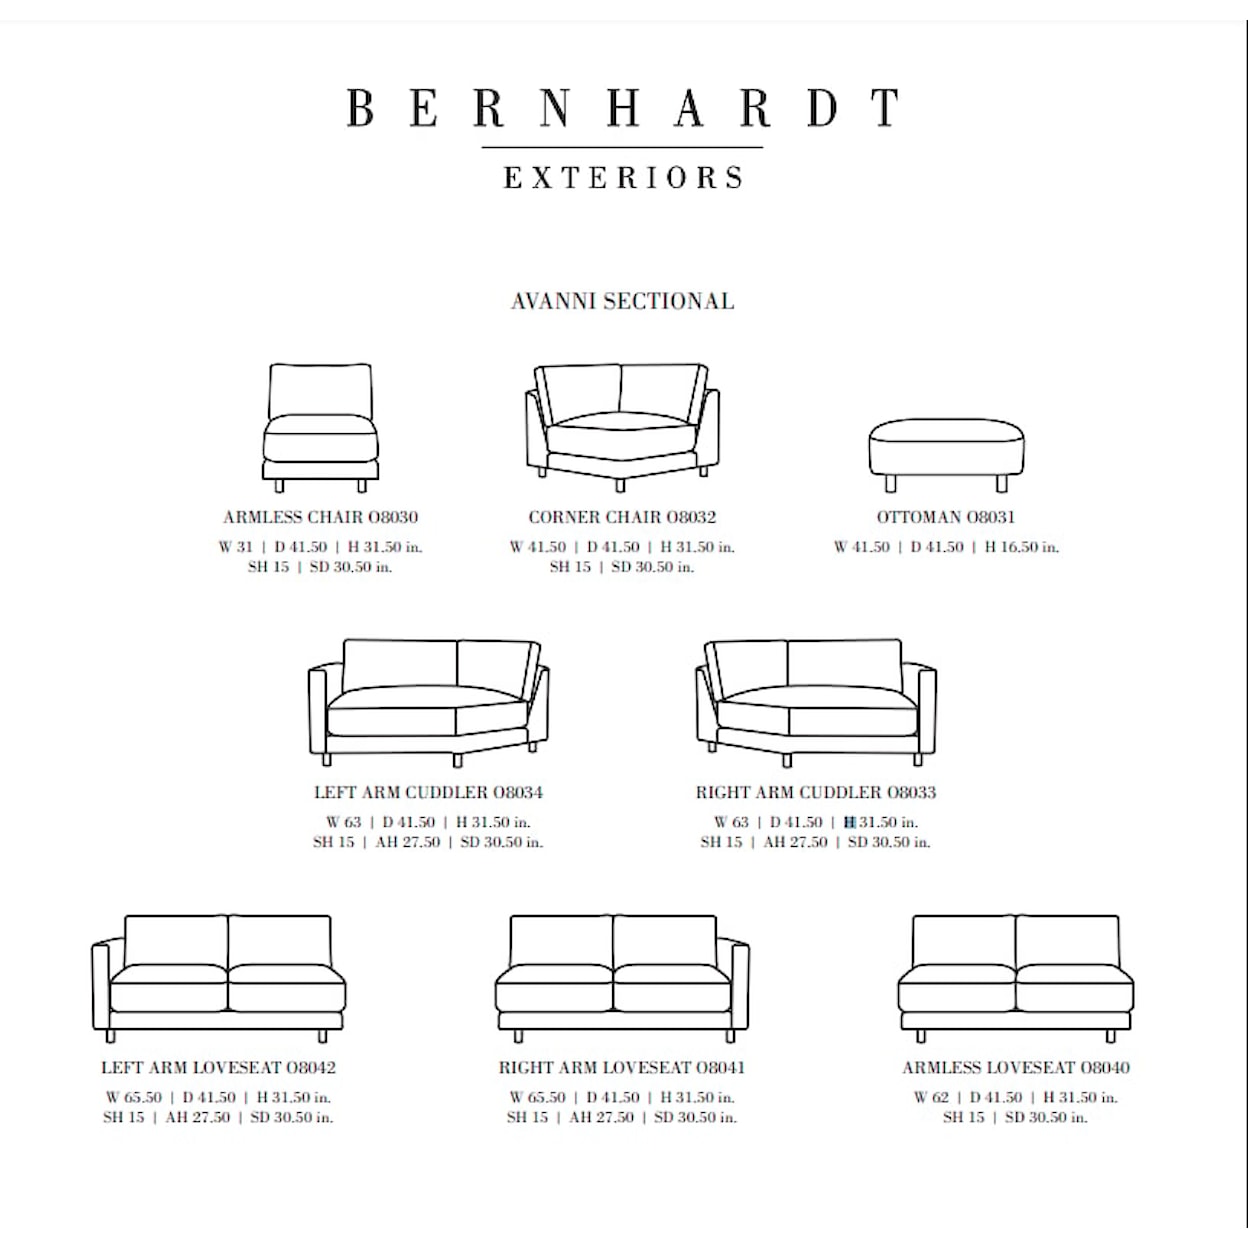 Bernhardt Bernhardt Exteriors Avanni Outdoor Sectional